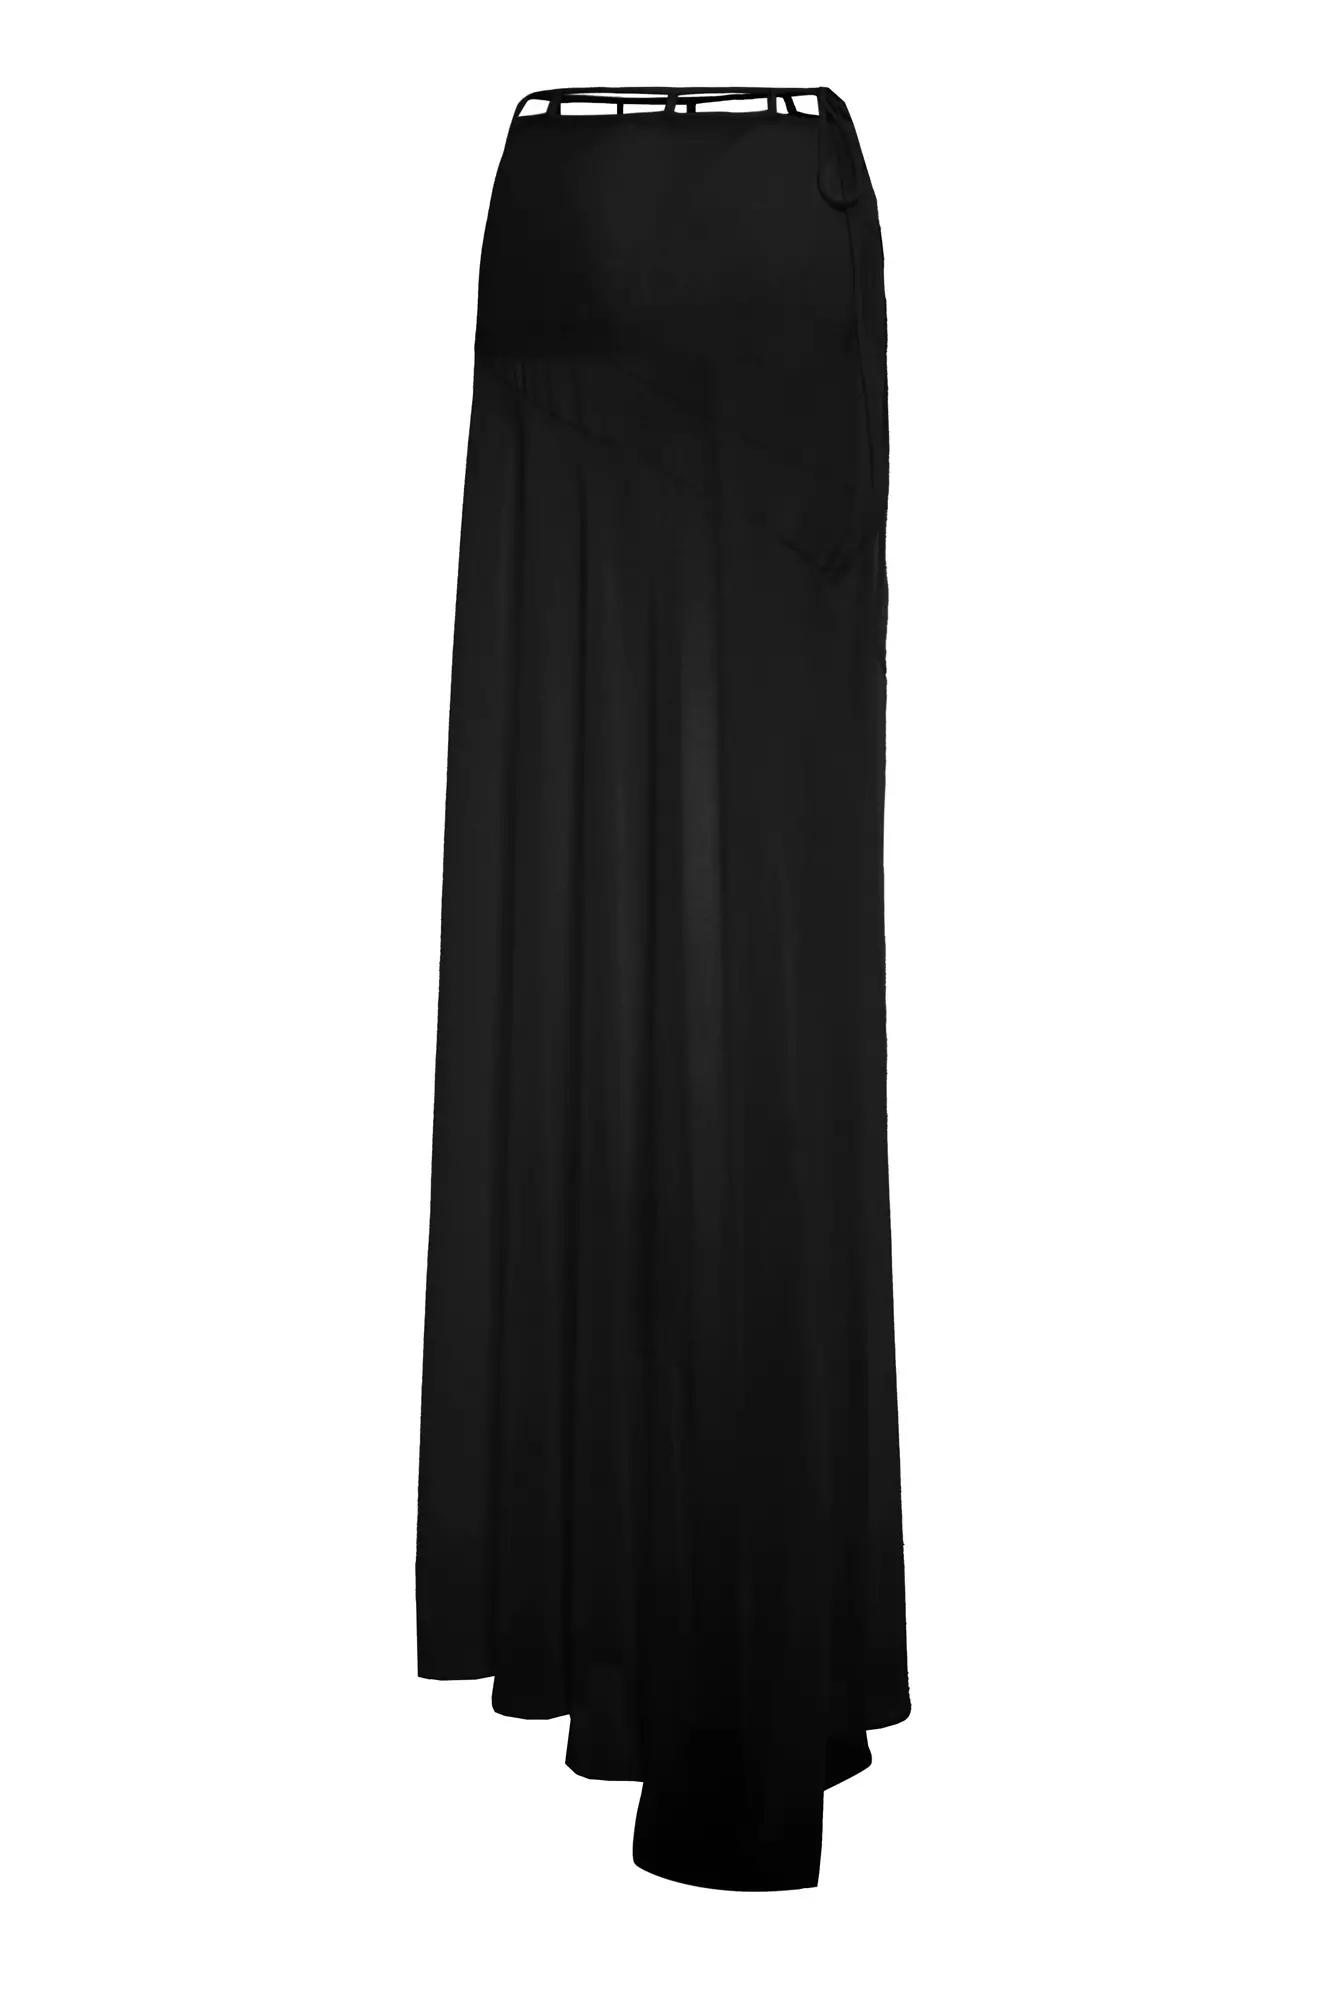 Black sifon long skirt